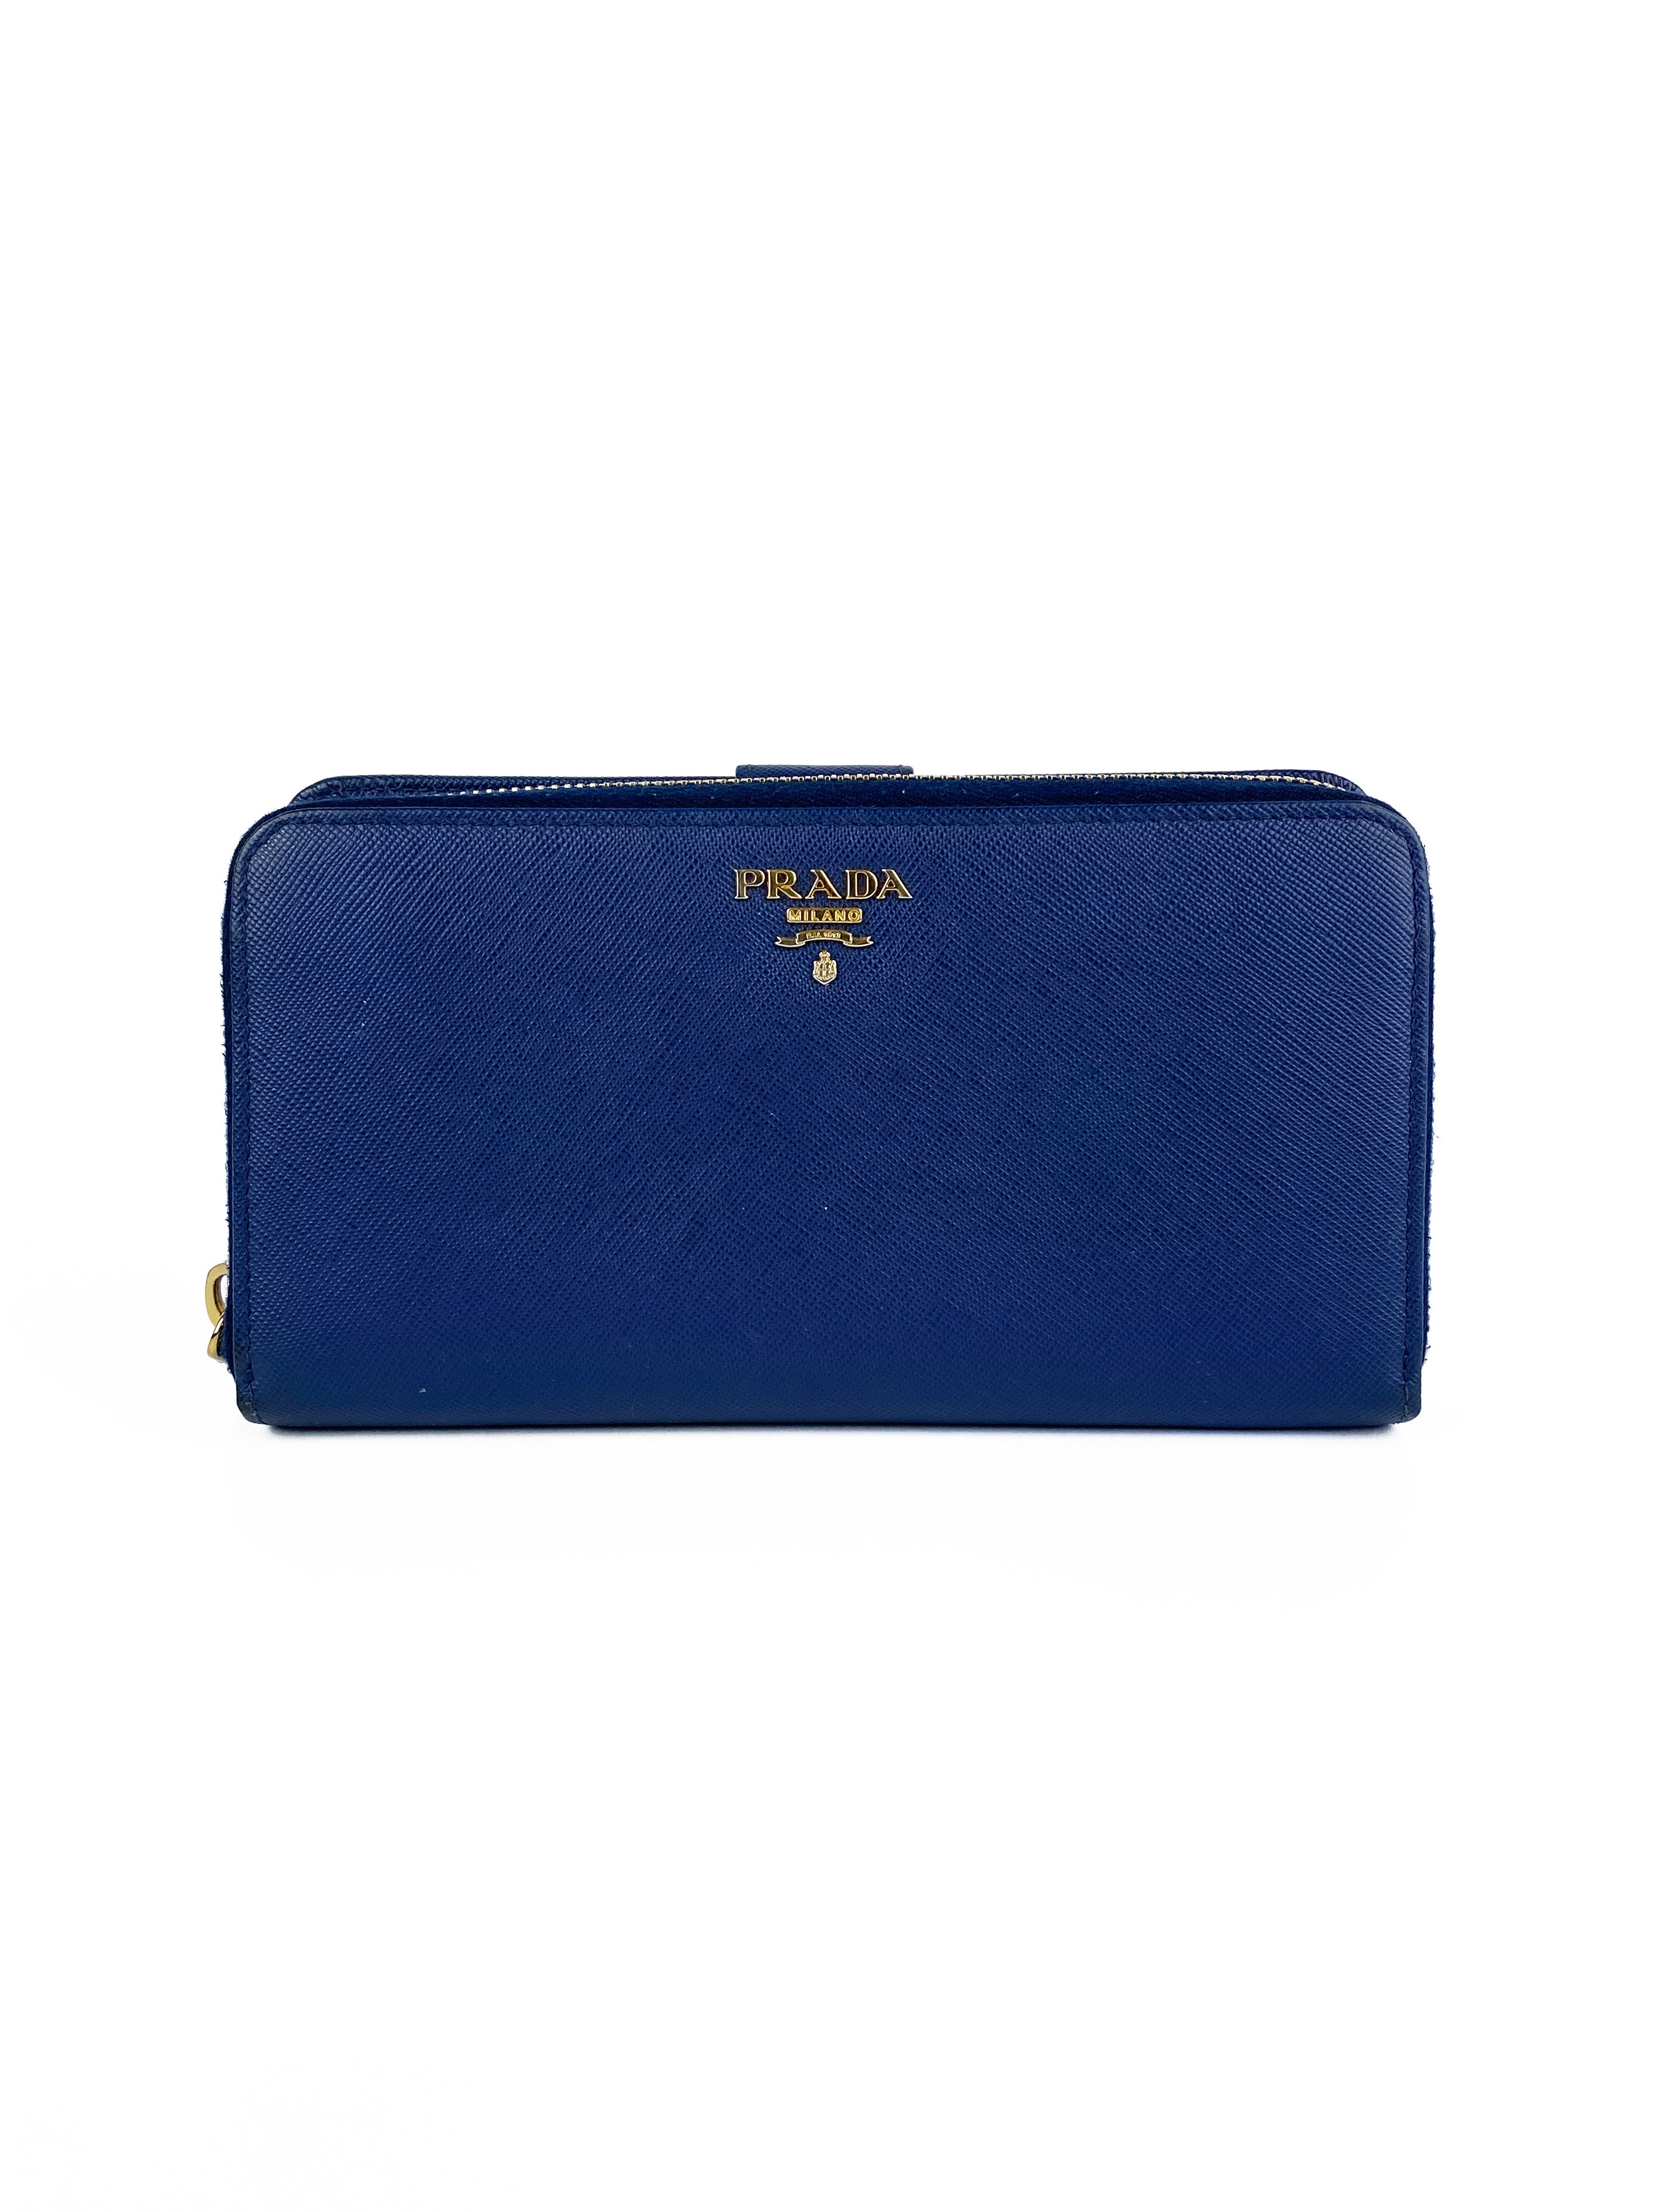 prada-blue-saffiano-wallet-1.jpg